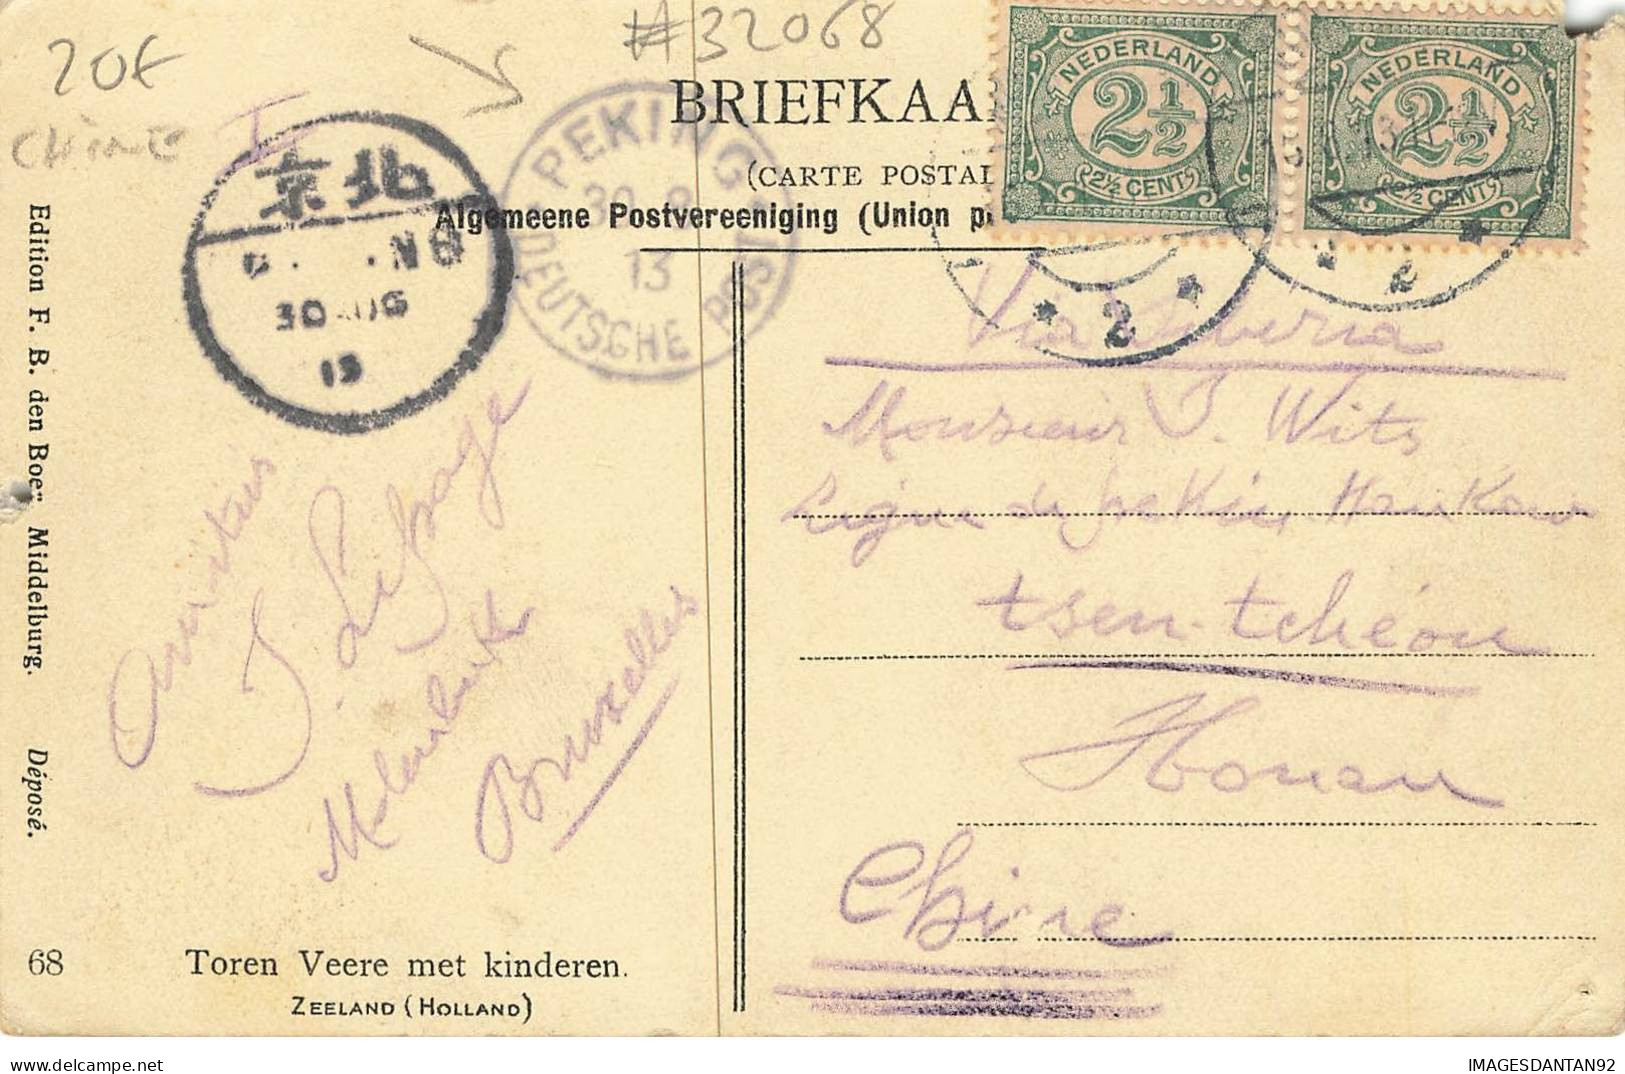 CHINE TSEN TCHEOU HONAN #32068 PEKING DEUTSCH POST CACHET CIRCULE FROM NEDERLAND PAYS BAS - Covers & Documents